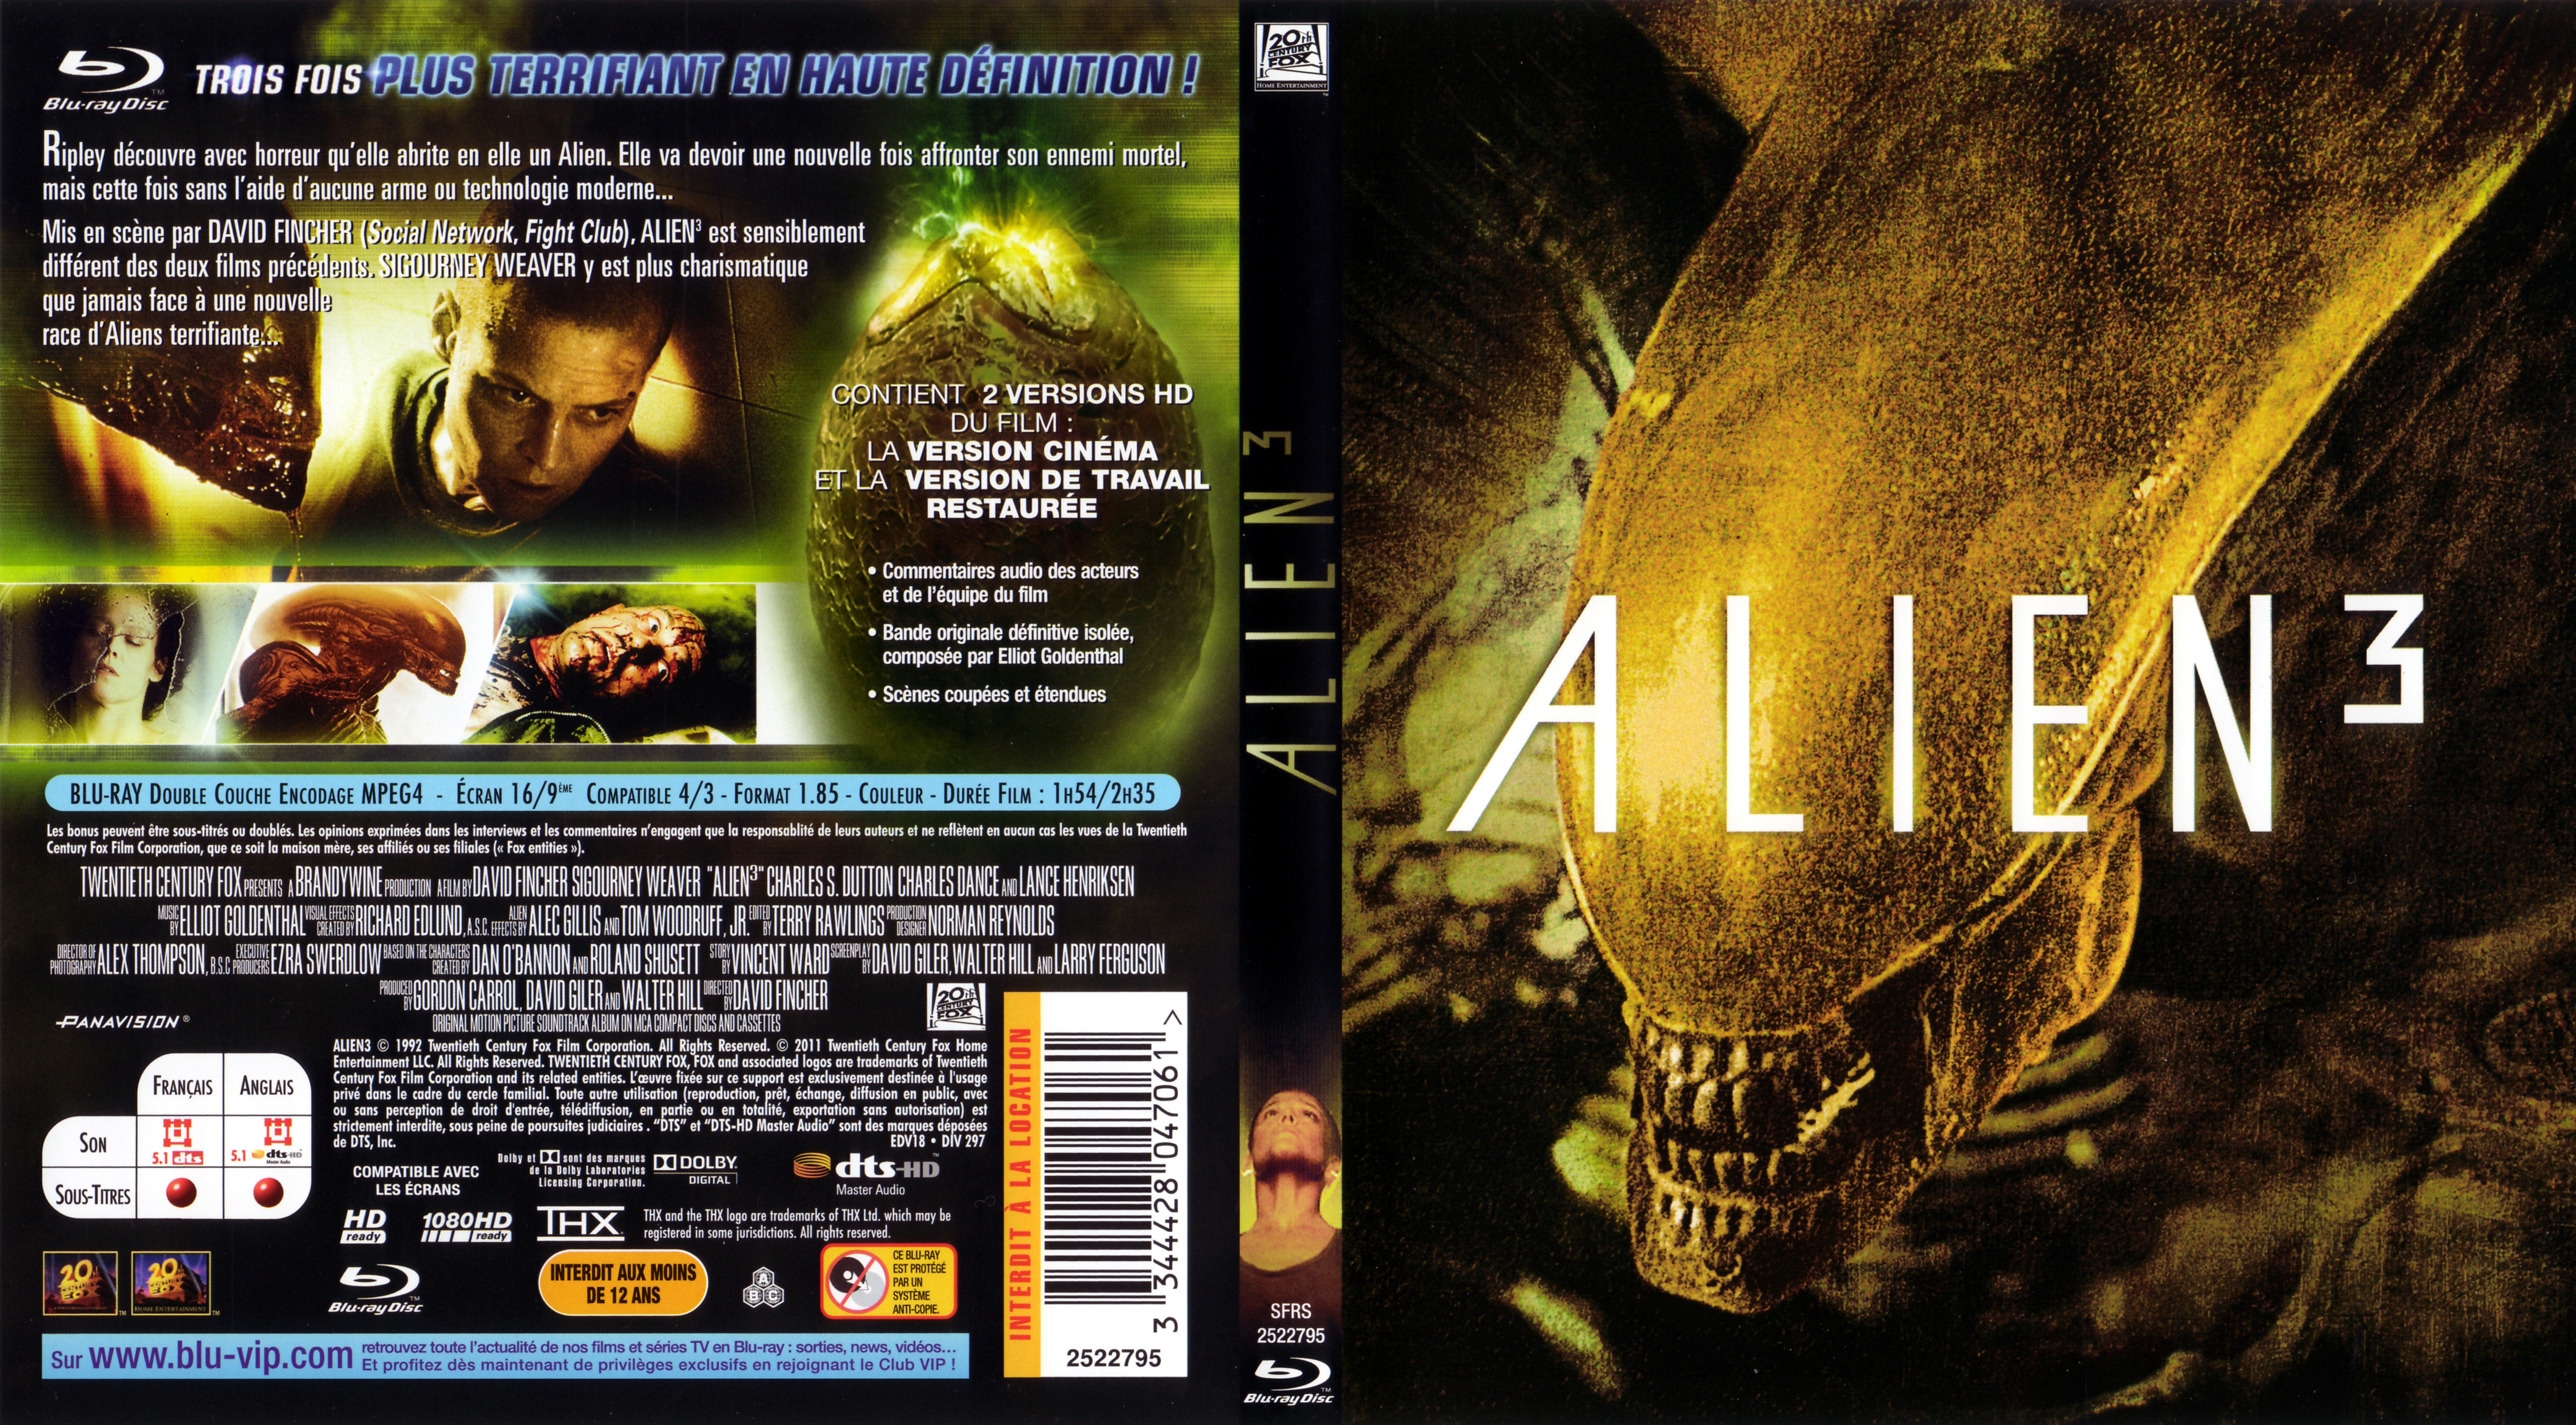 Jaquette DVD Alien 3 (BLU-RAY) v2